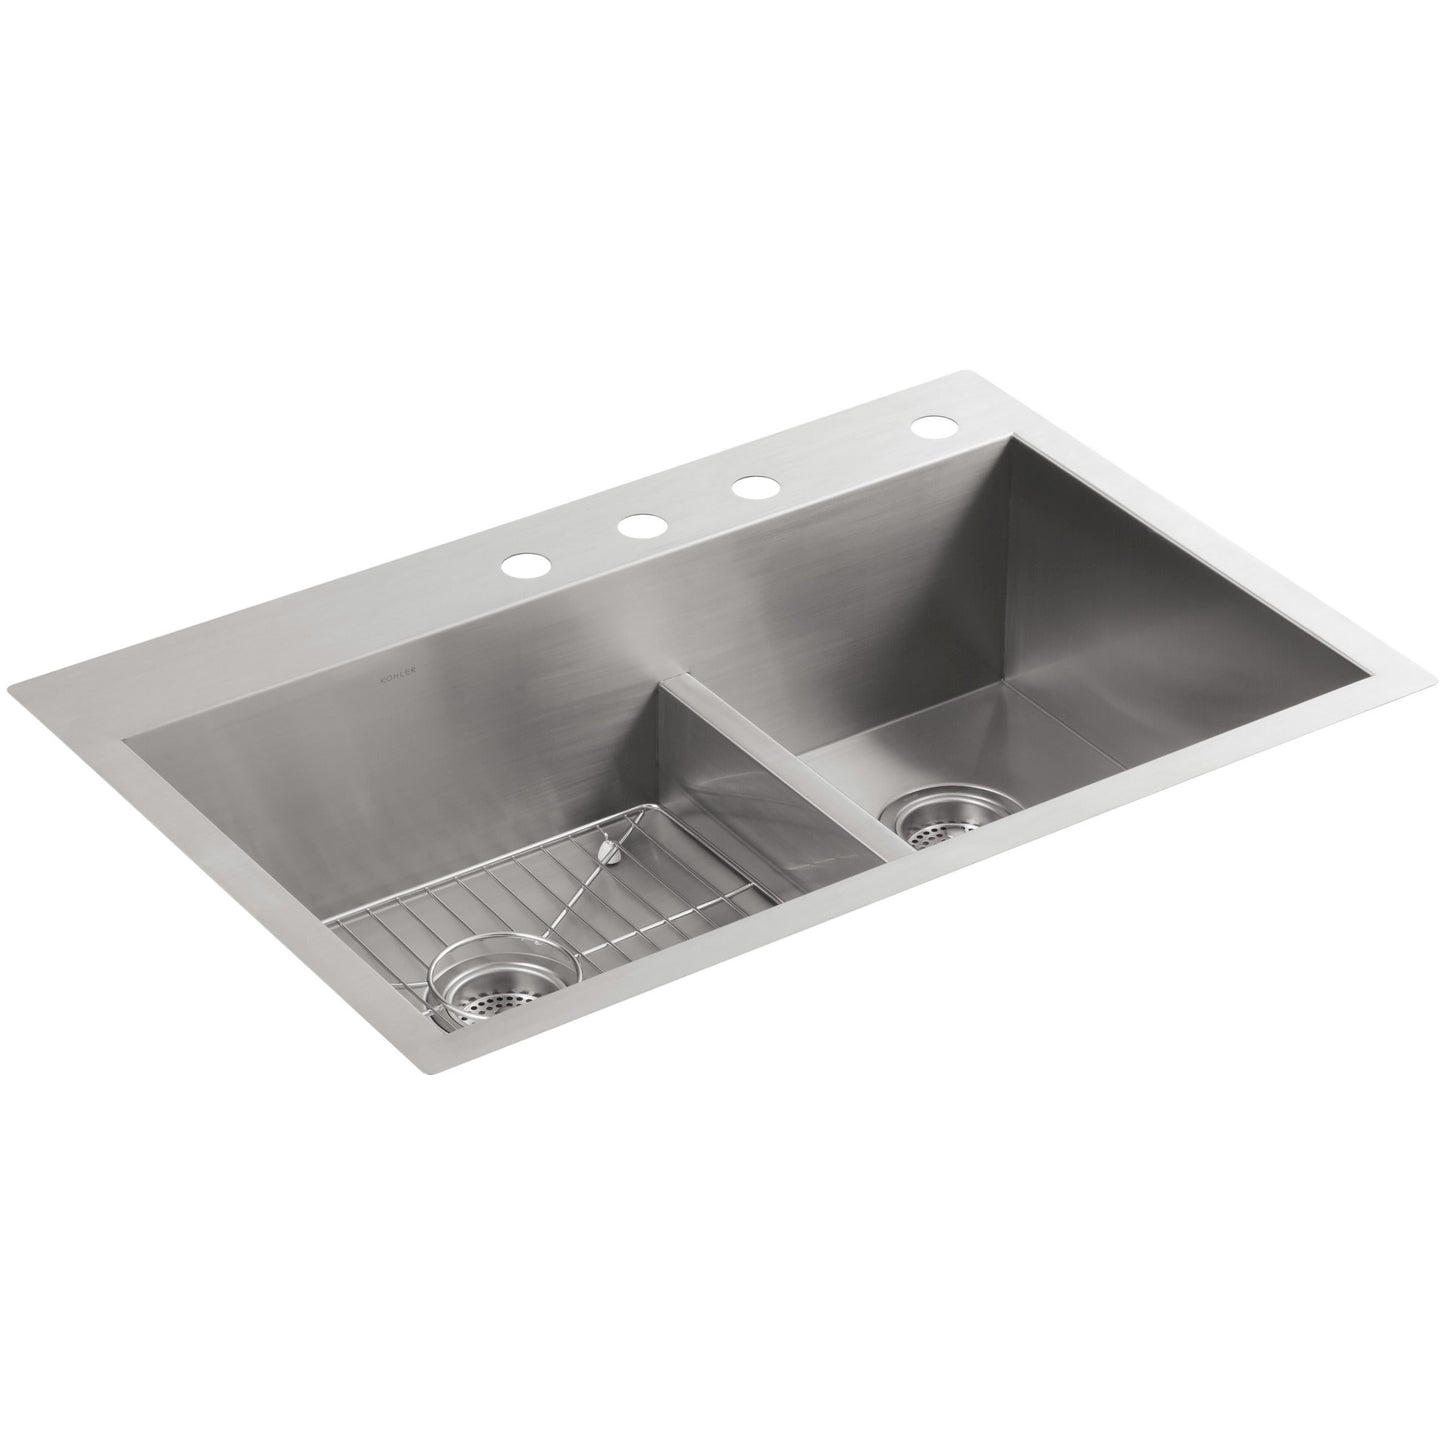 Kohler K-3839-4-NA - 33" x 22" Smart Divide Top Mount / Undermount Double Bowl Kitchen Sink, 4 Deck